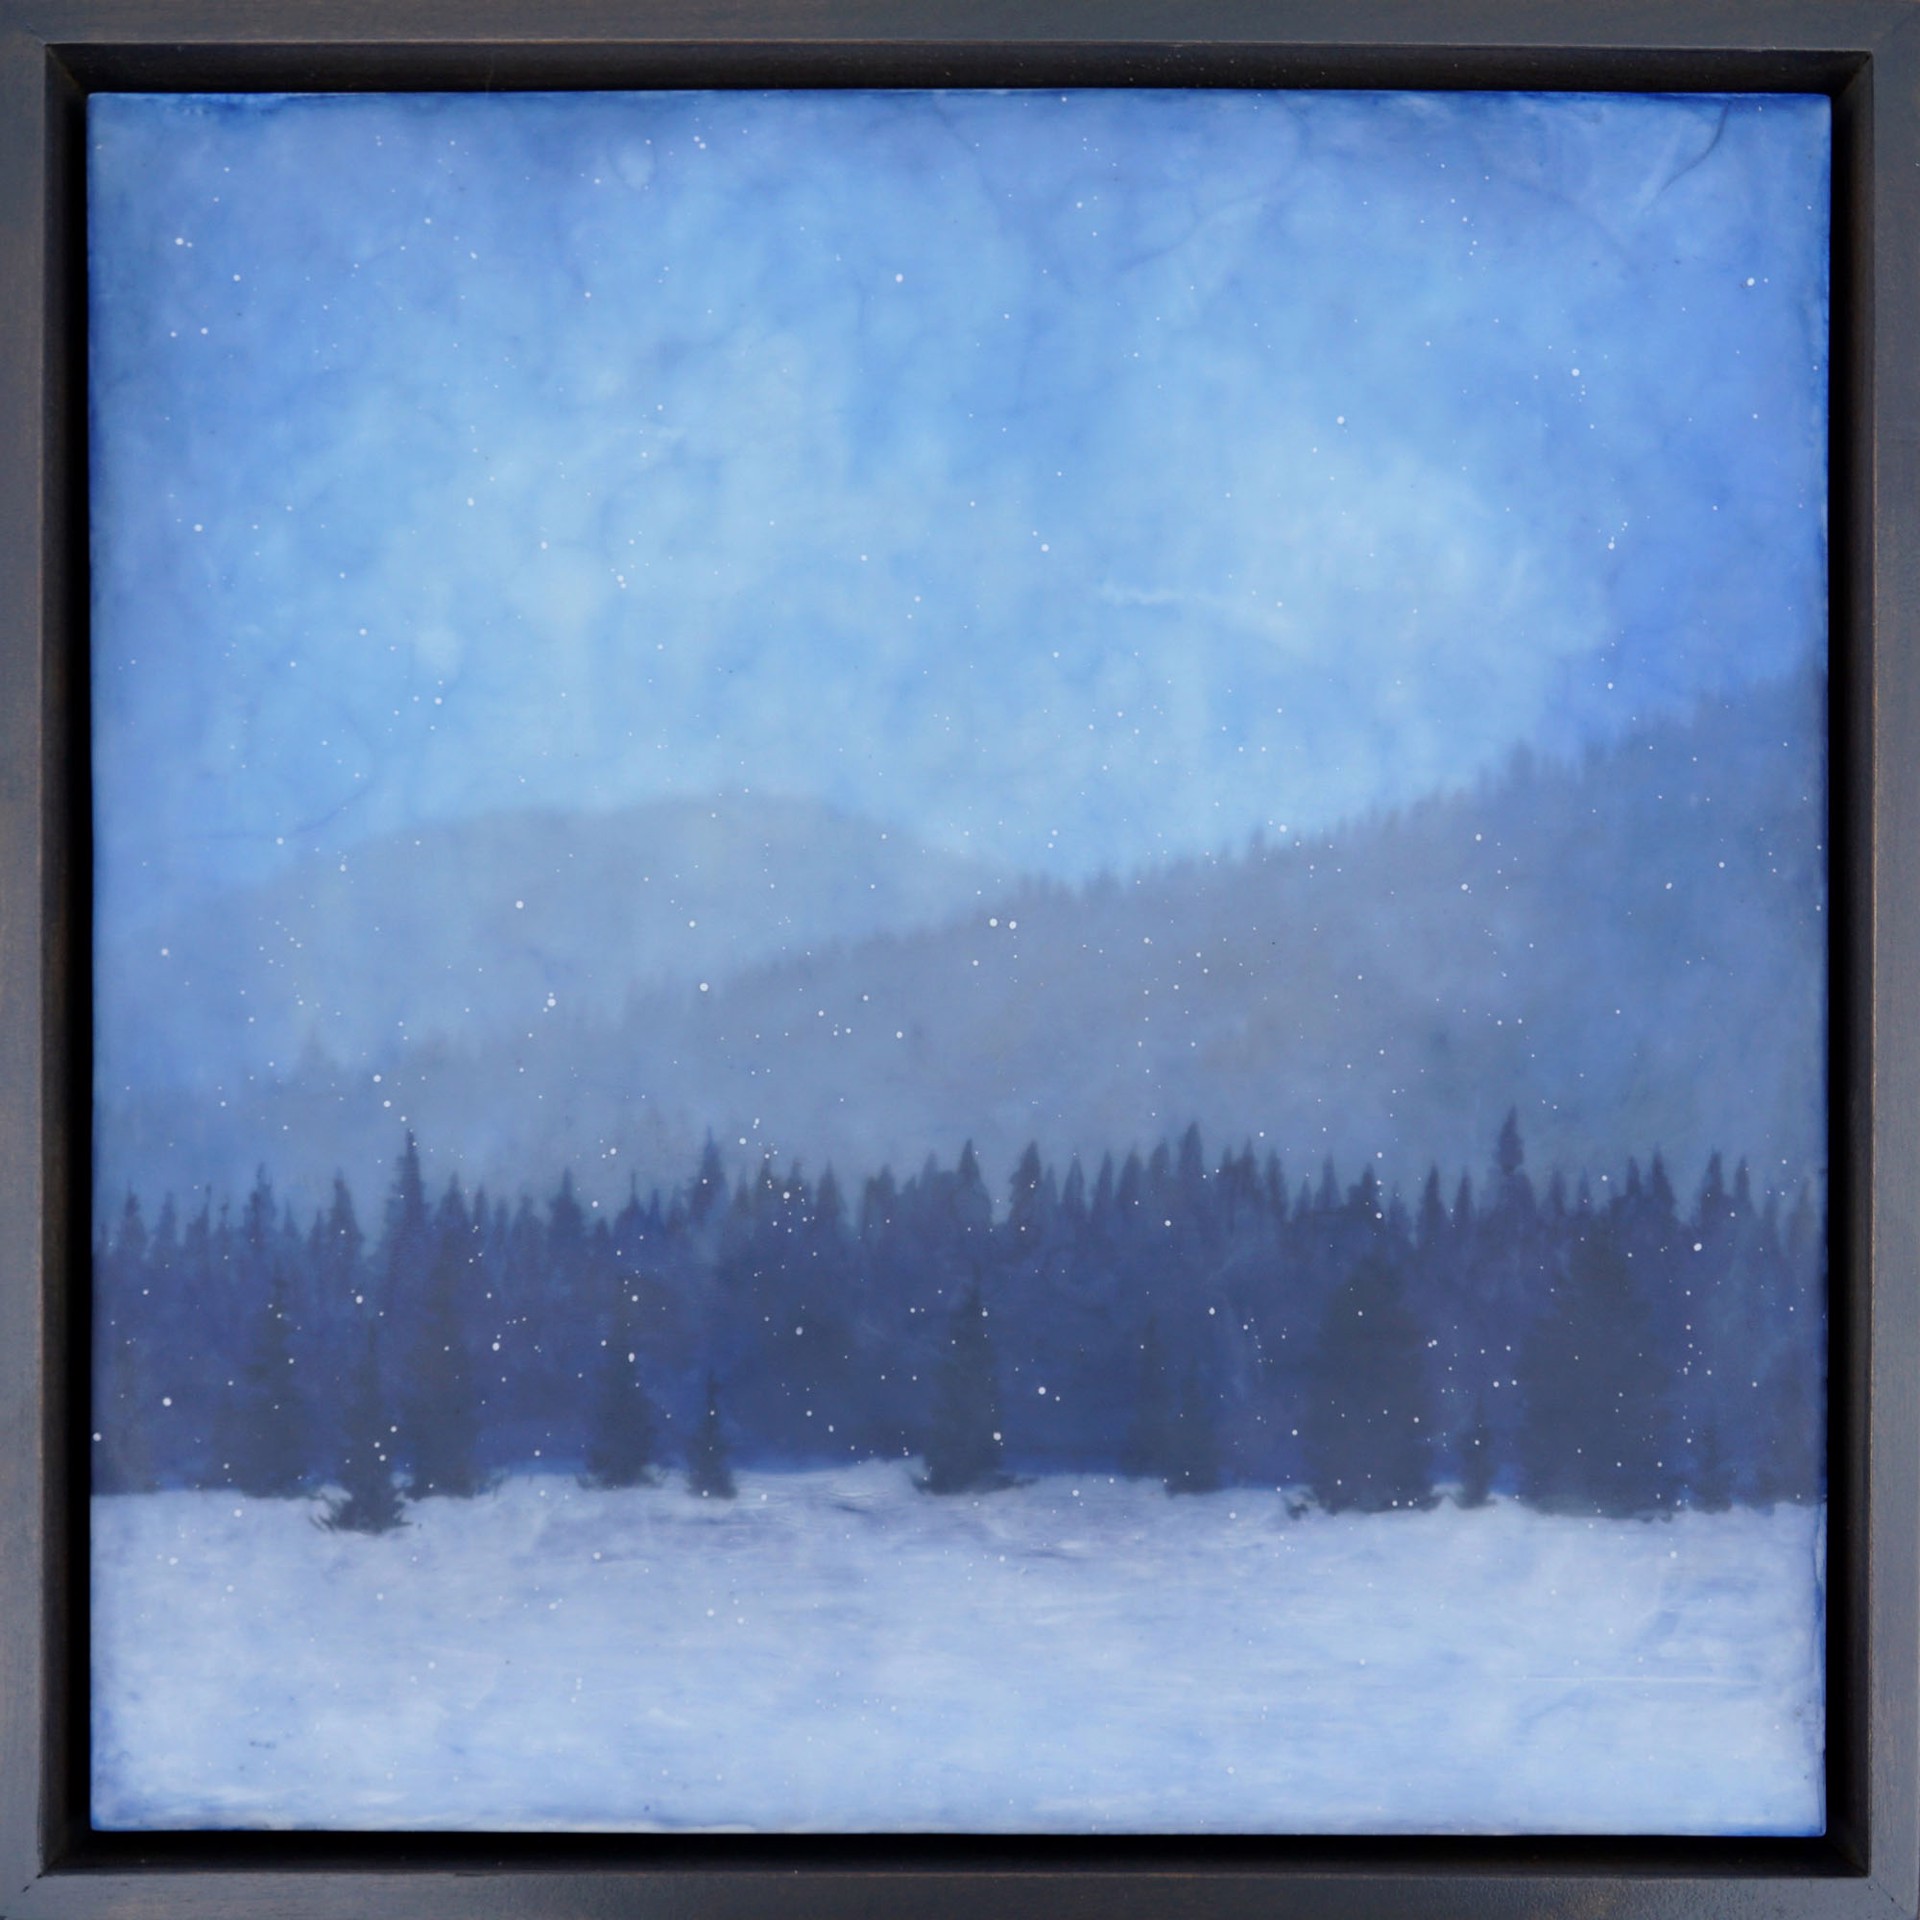 Original Encaustic Landscape Painting By Bridgette Meinhold Featuring Blue Ridges In Snow Covered Scene